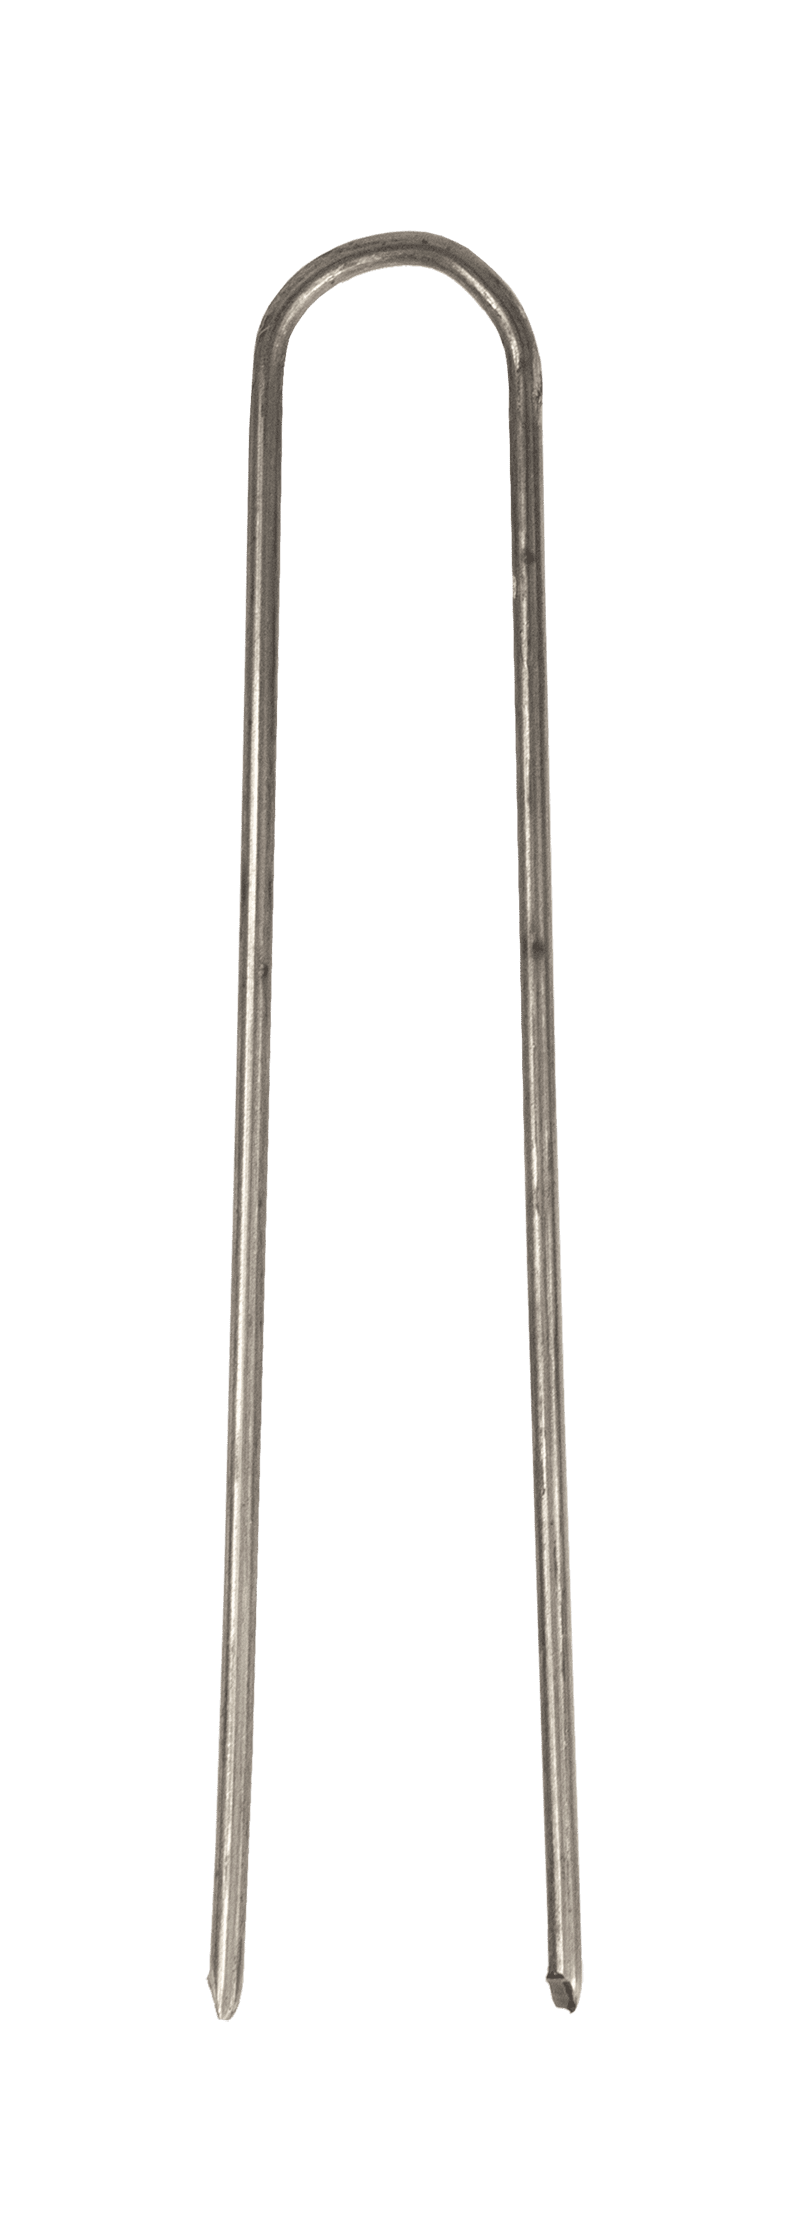 Efeunadeln, Metall, 60 mm, 100g-Beutel DIY Basteln Blumengestecke Deko